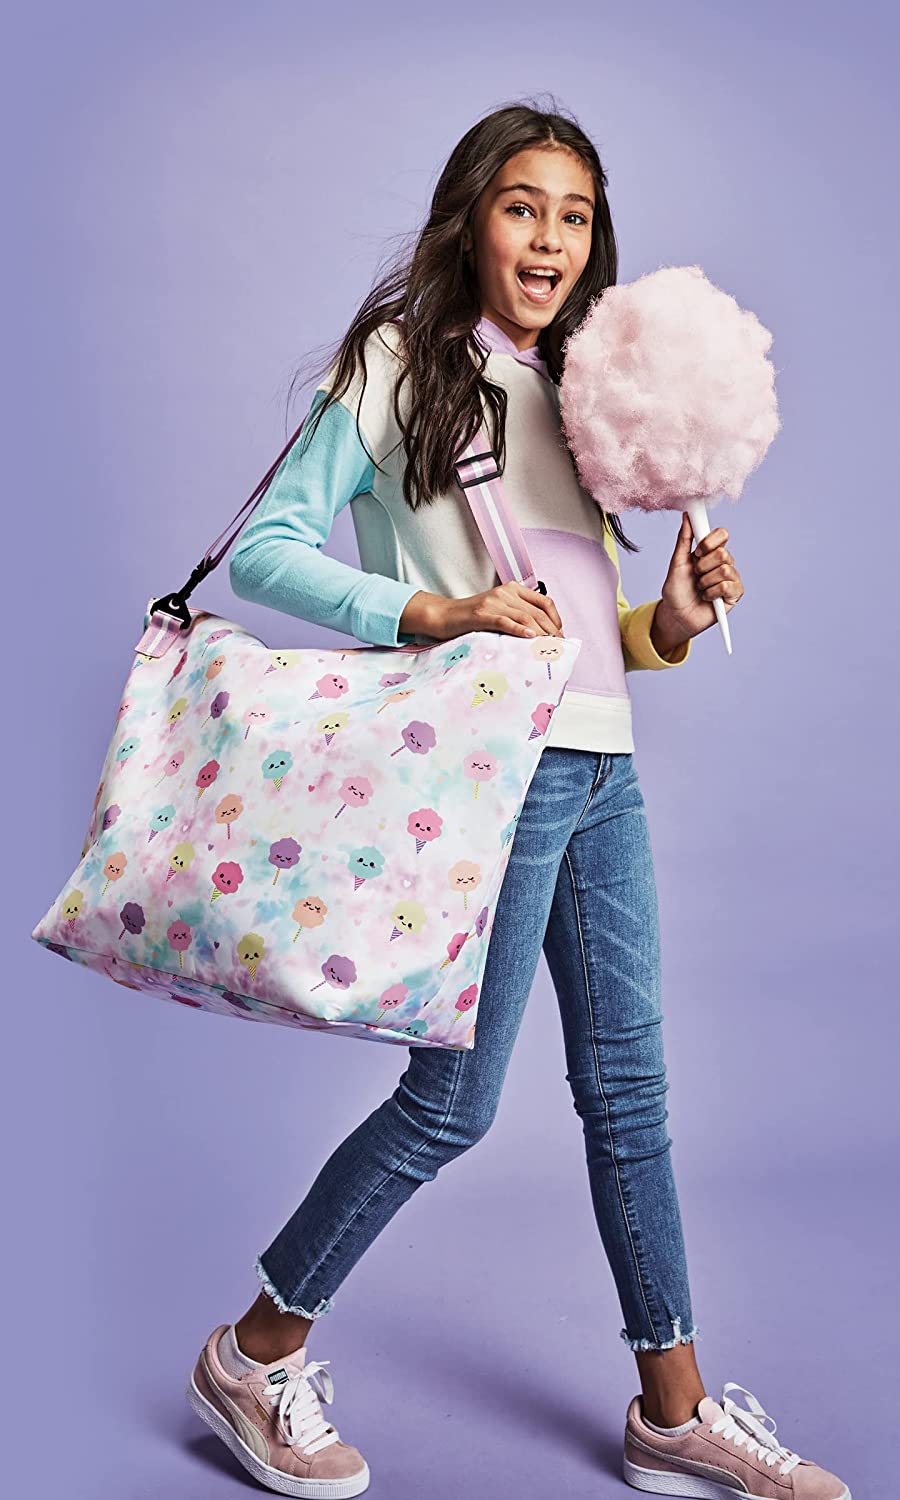 Dandy Cotton Candy Weekender Bag